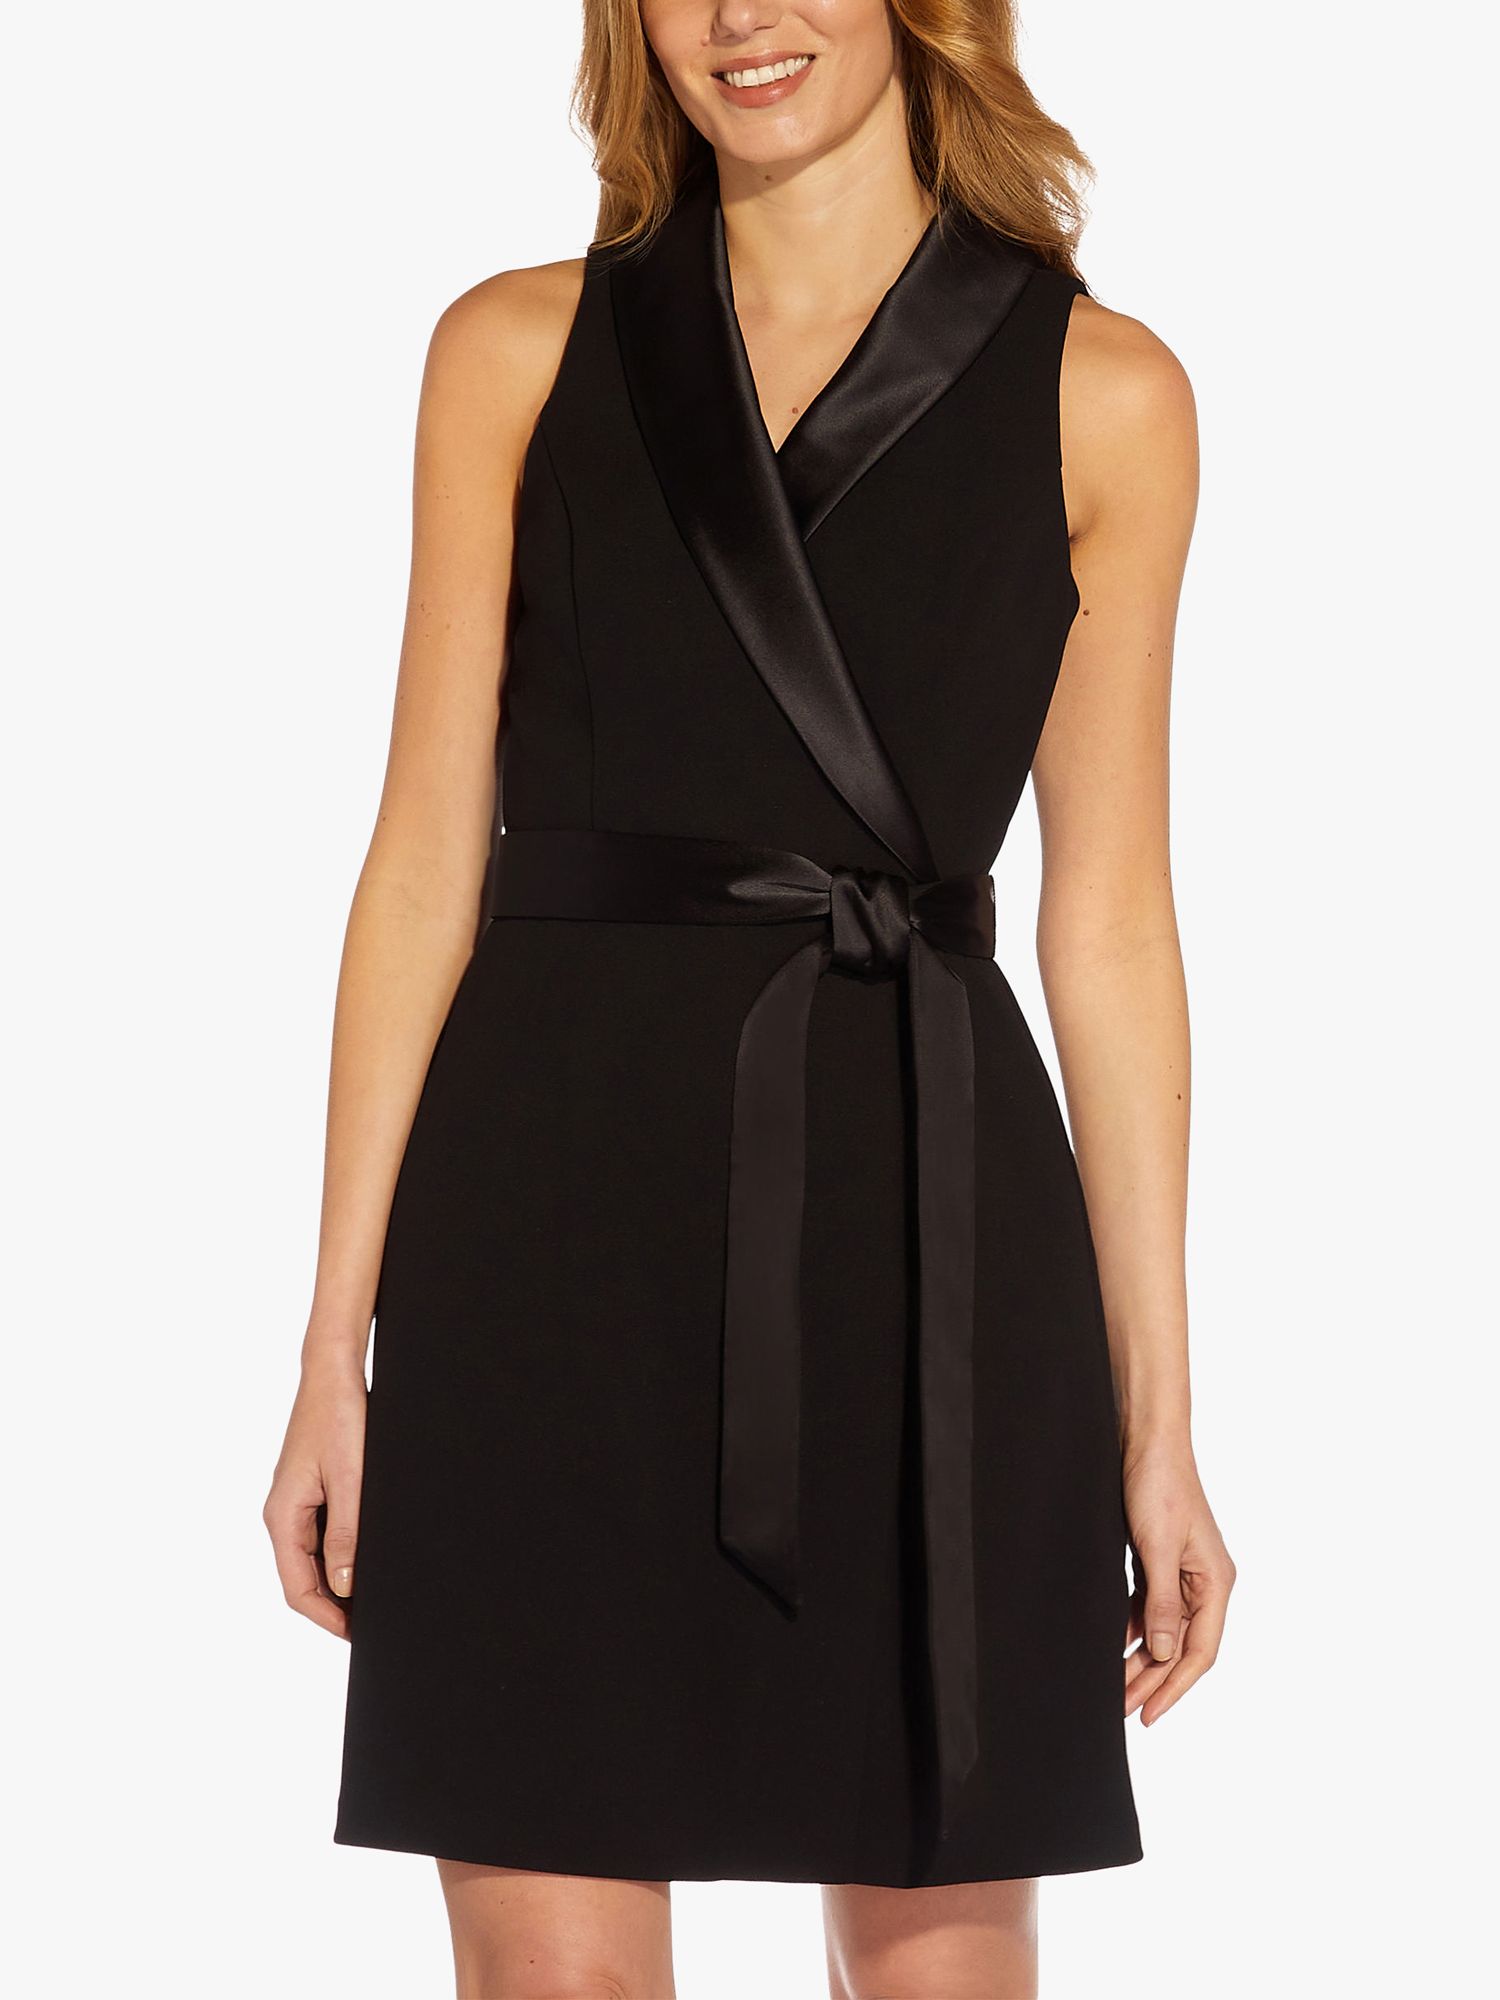 Calvin Klein Women's Belted Wrap Colorblocked Dress (4, White/Black) 